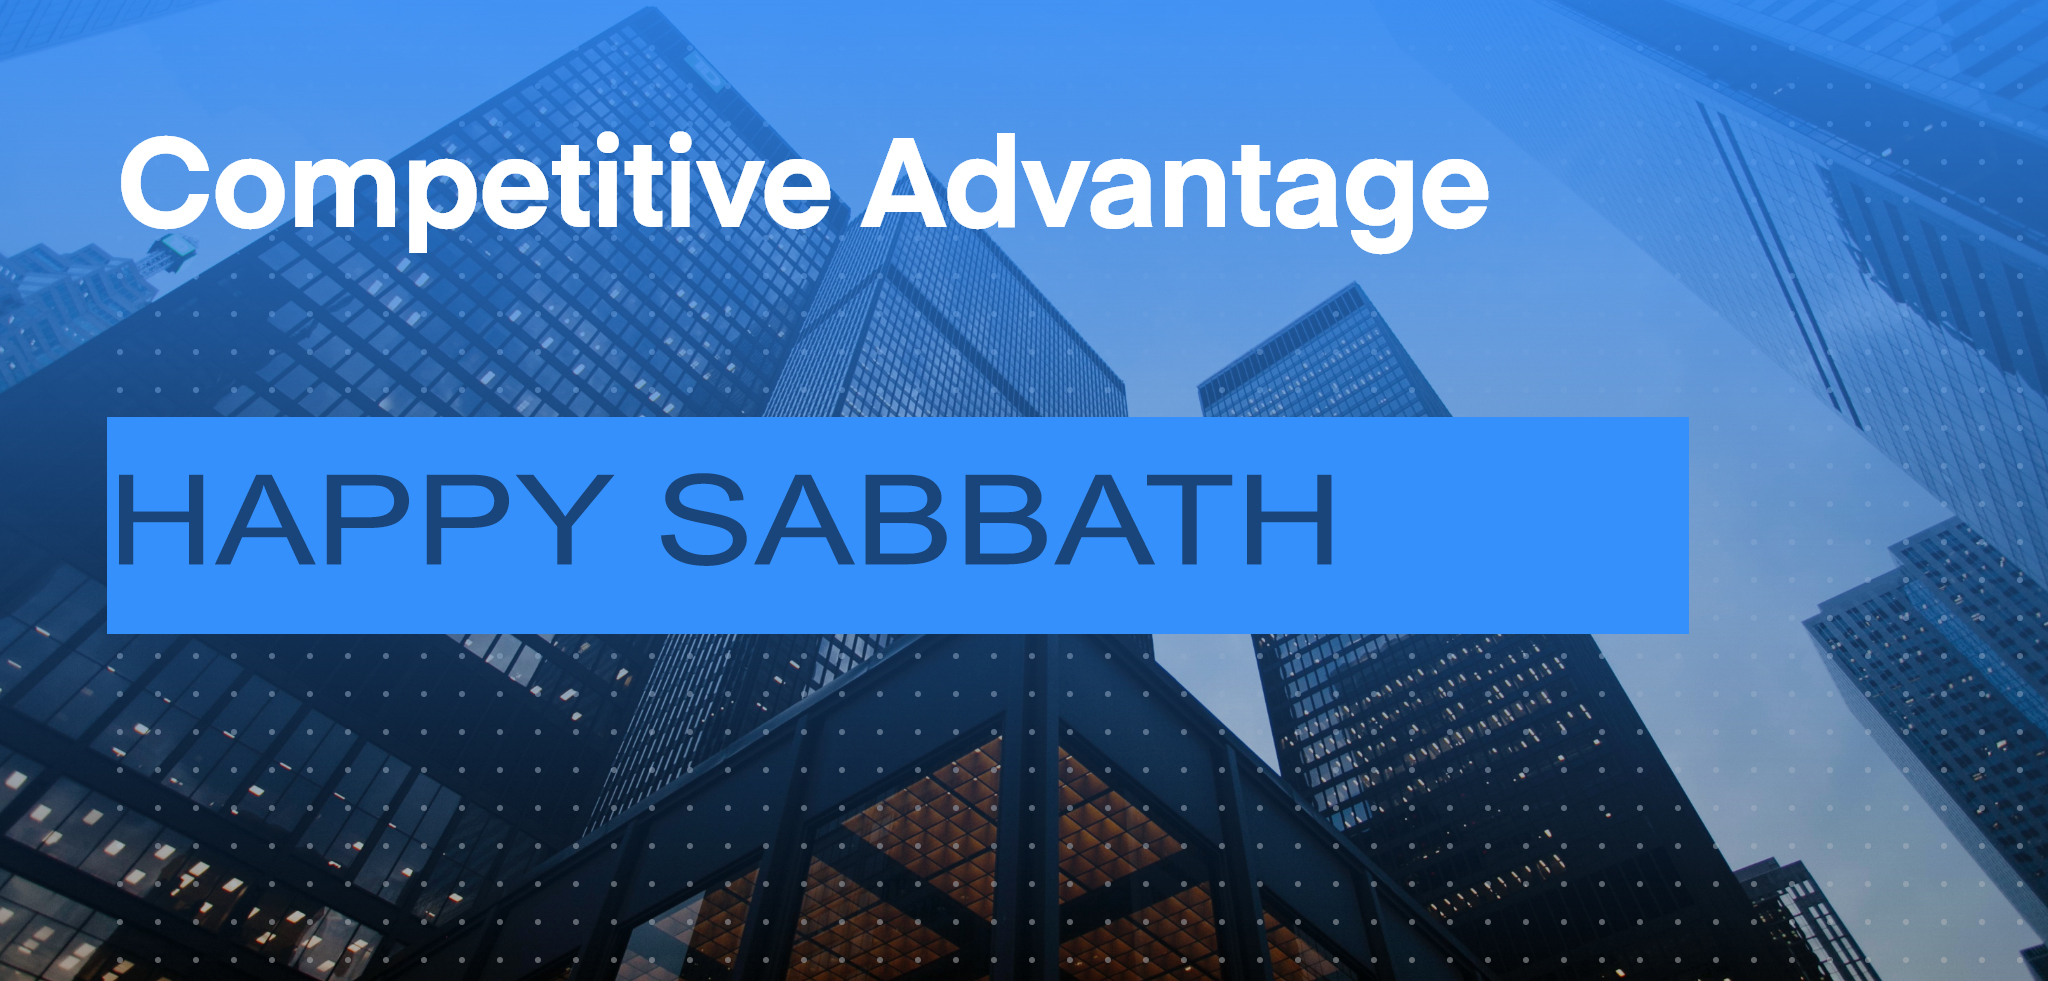 OTIB, JA. Competitive Advantage through Sabbath Observance